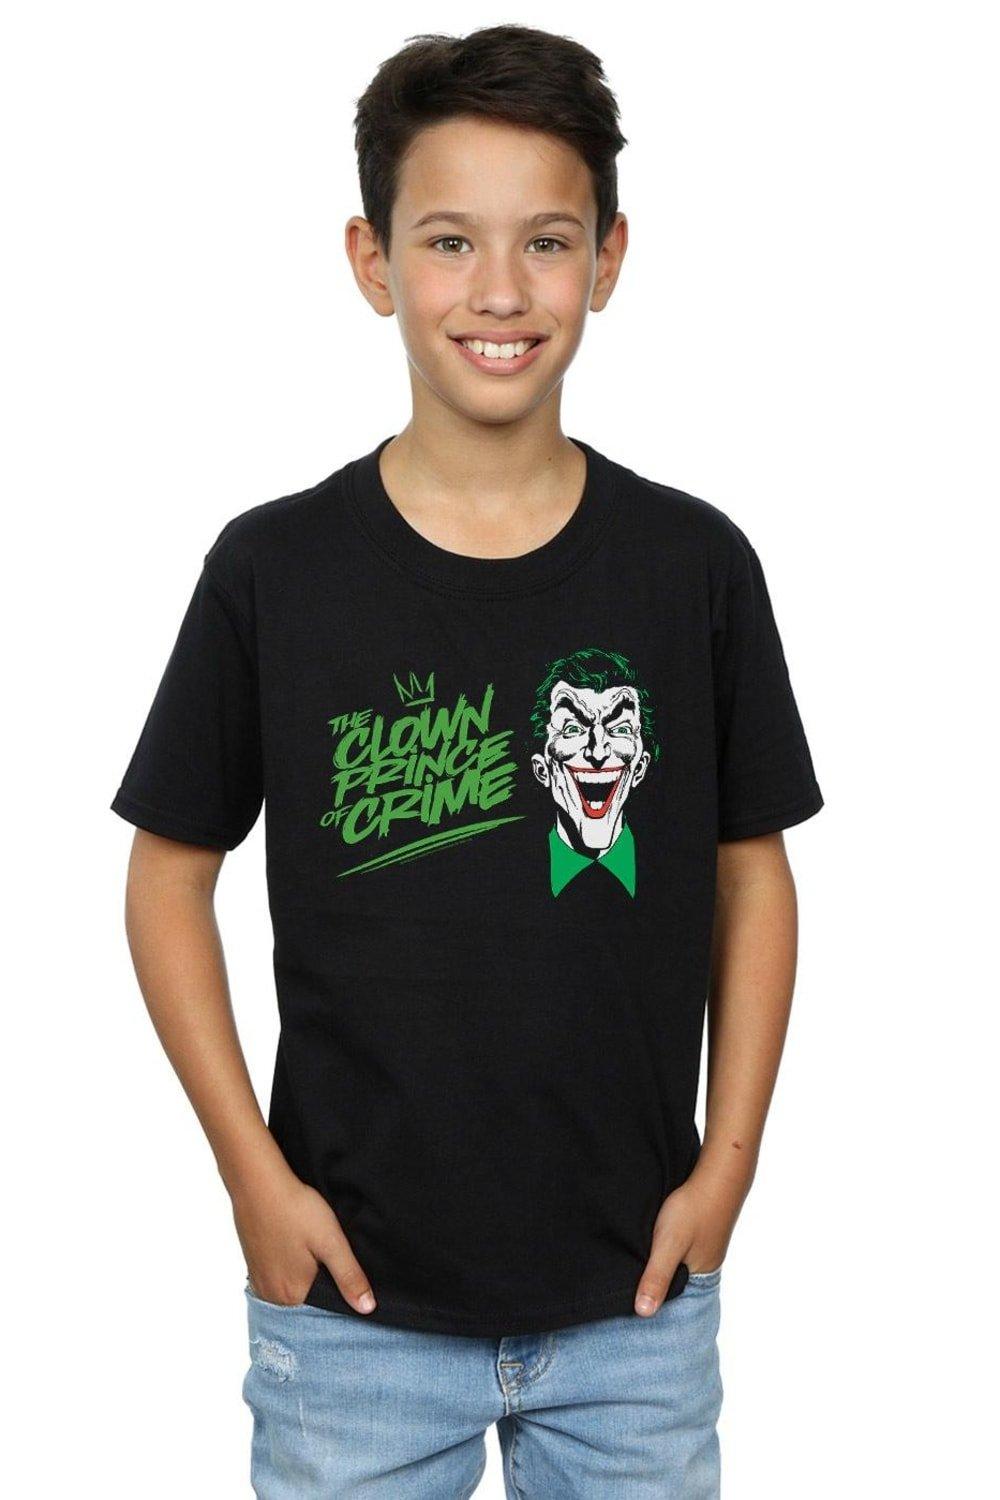 Batman Joker The Clown Prince Of Crime T-Shirt